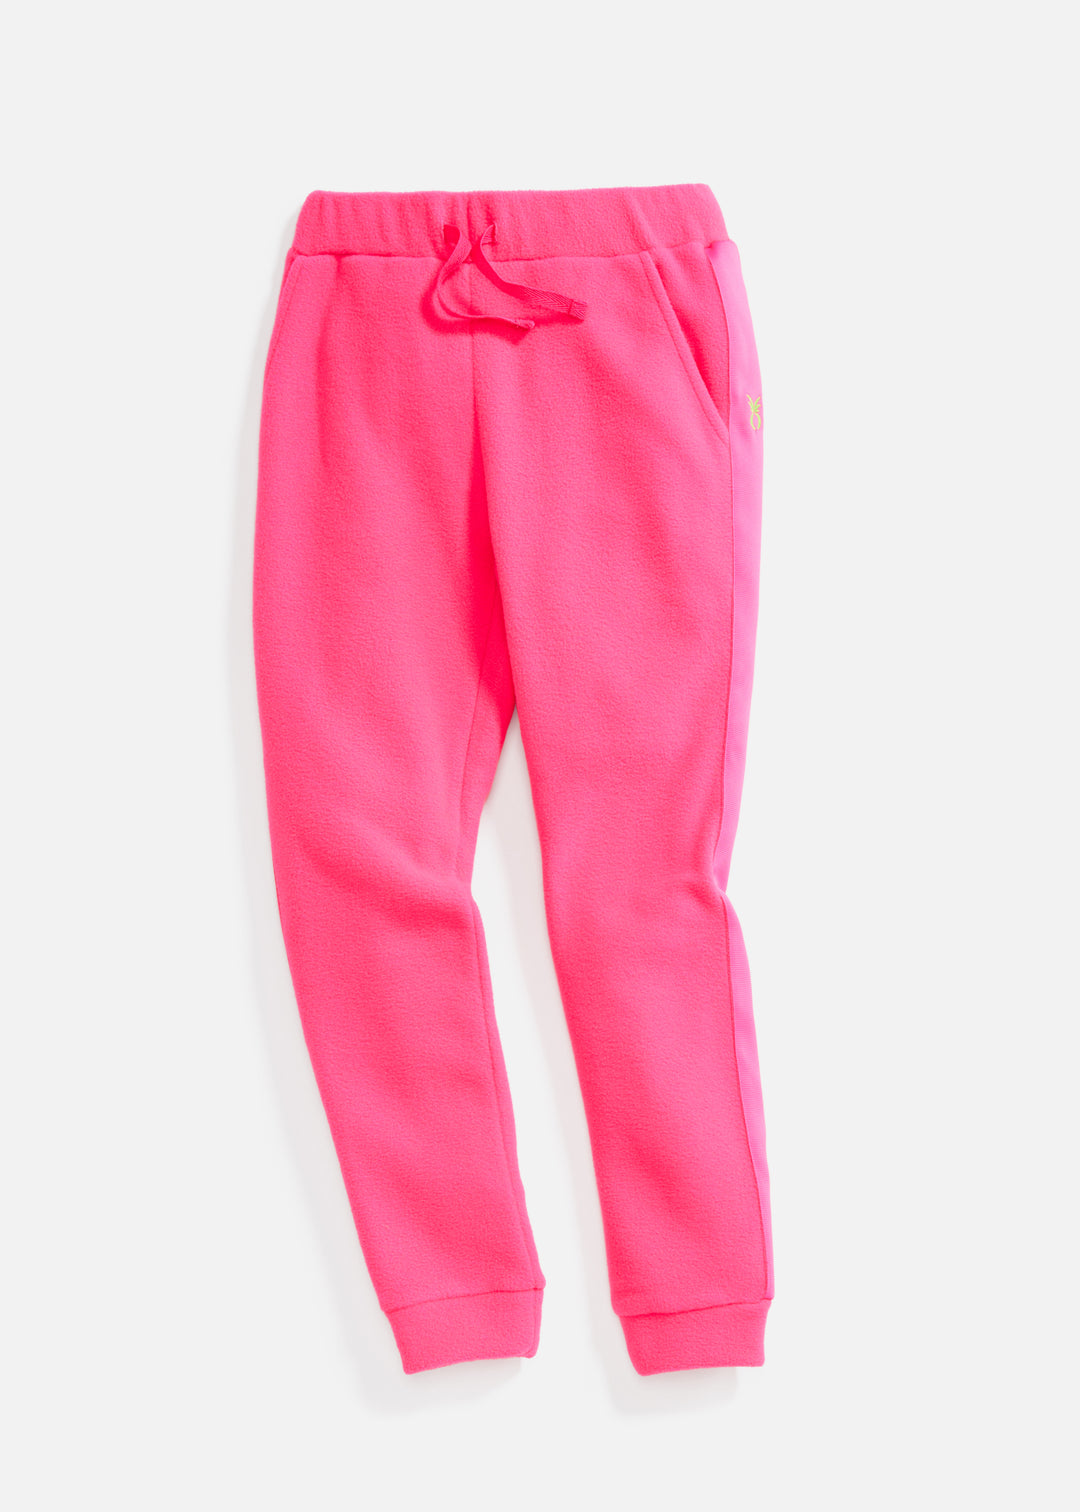 Girls Jay Joggers in Vello Fleece (Neon Pink)